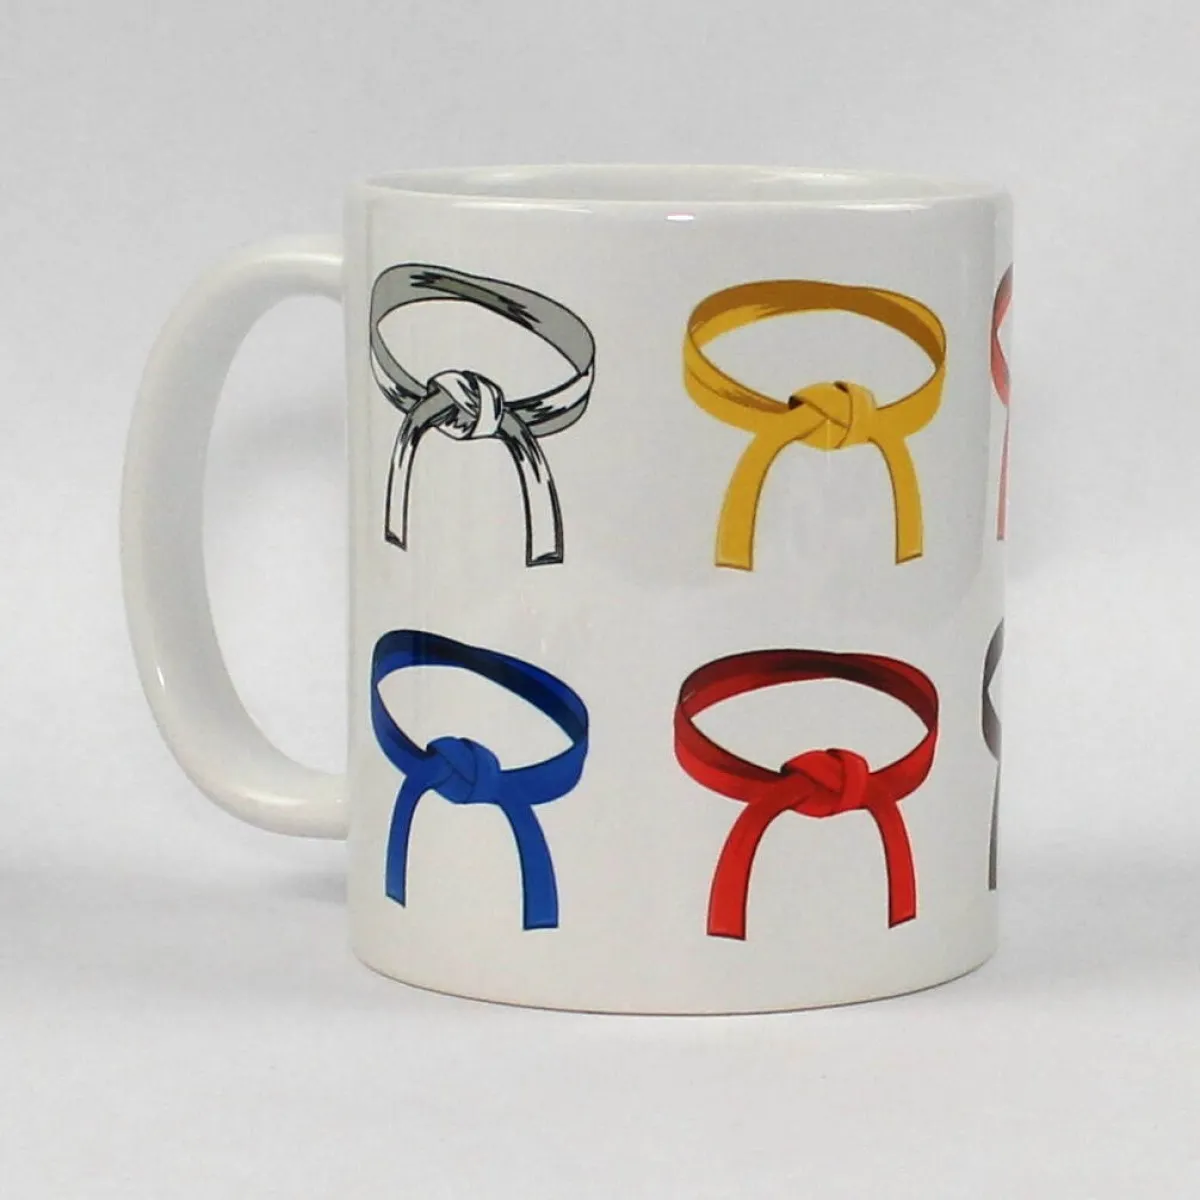 cup white printed with Aikido evolution - Kopie - Kopie - Kopie